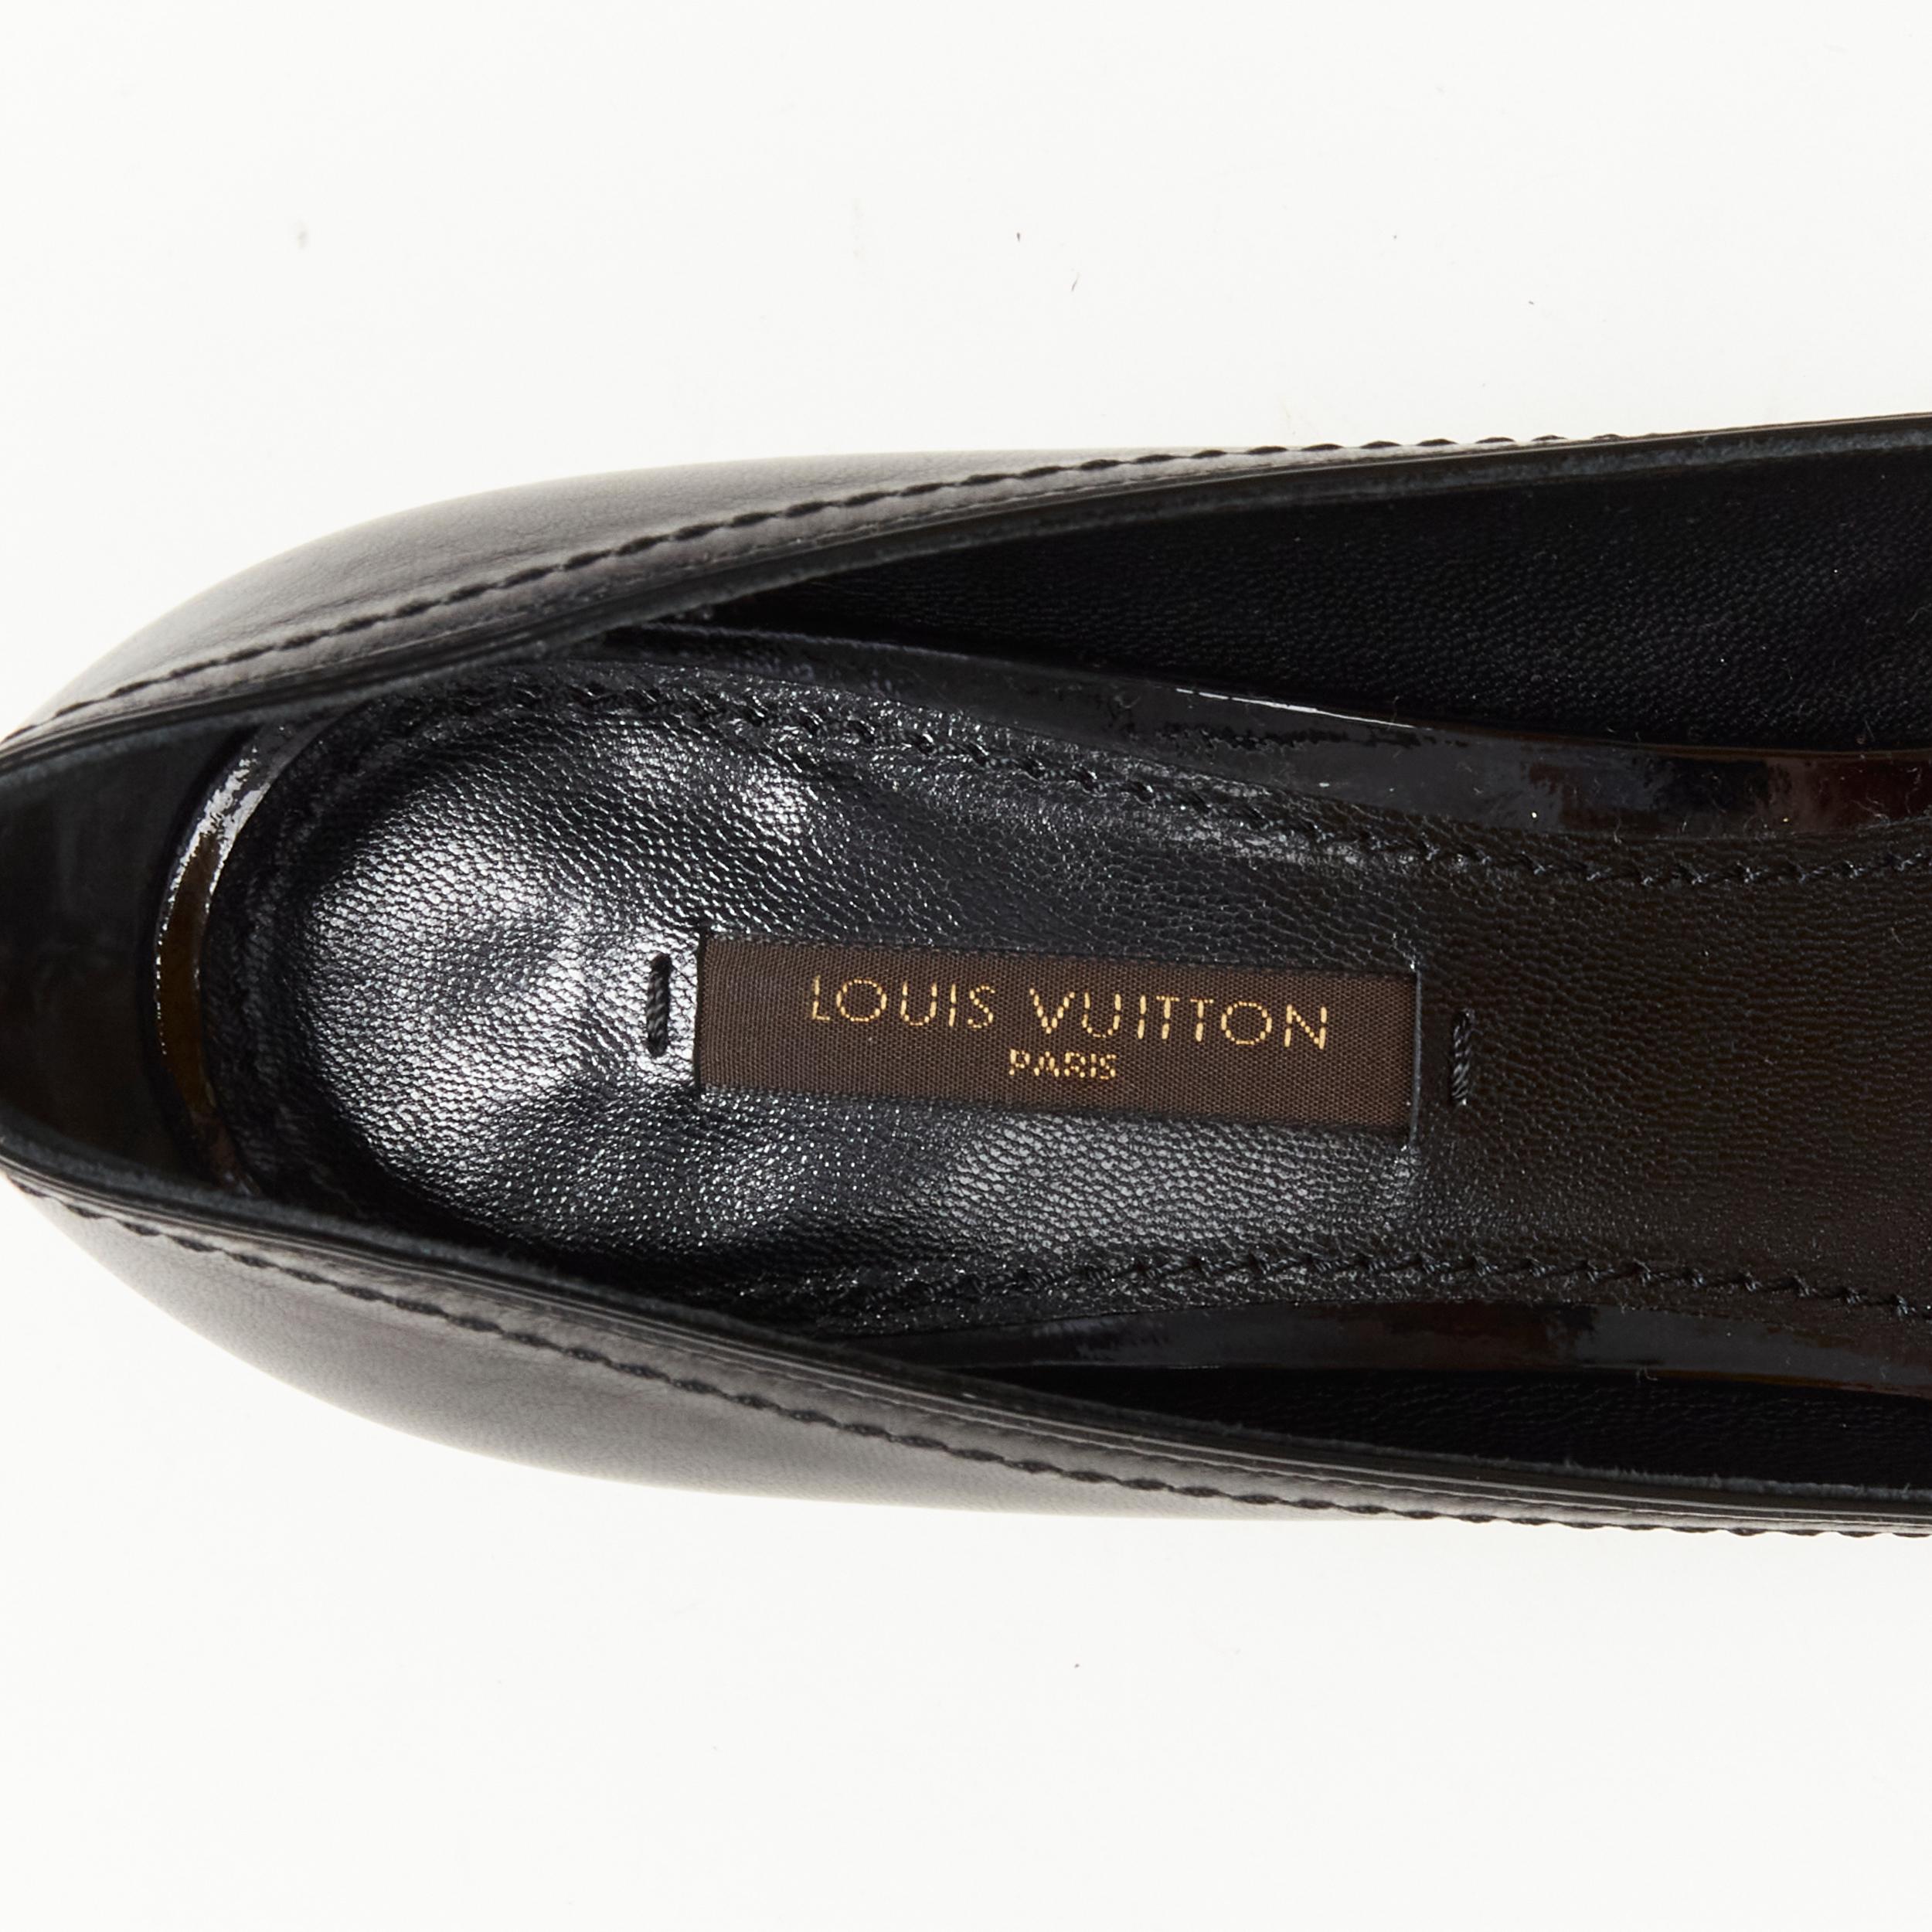 LOUIS VUITTON gold LV dice charm black leather mid heel pump EU36.5 For Sale 3